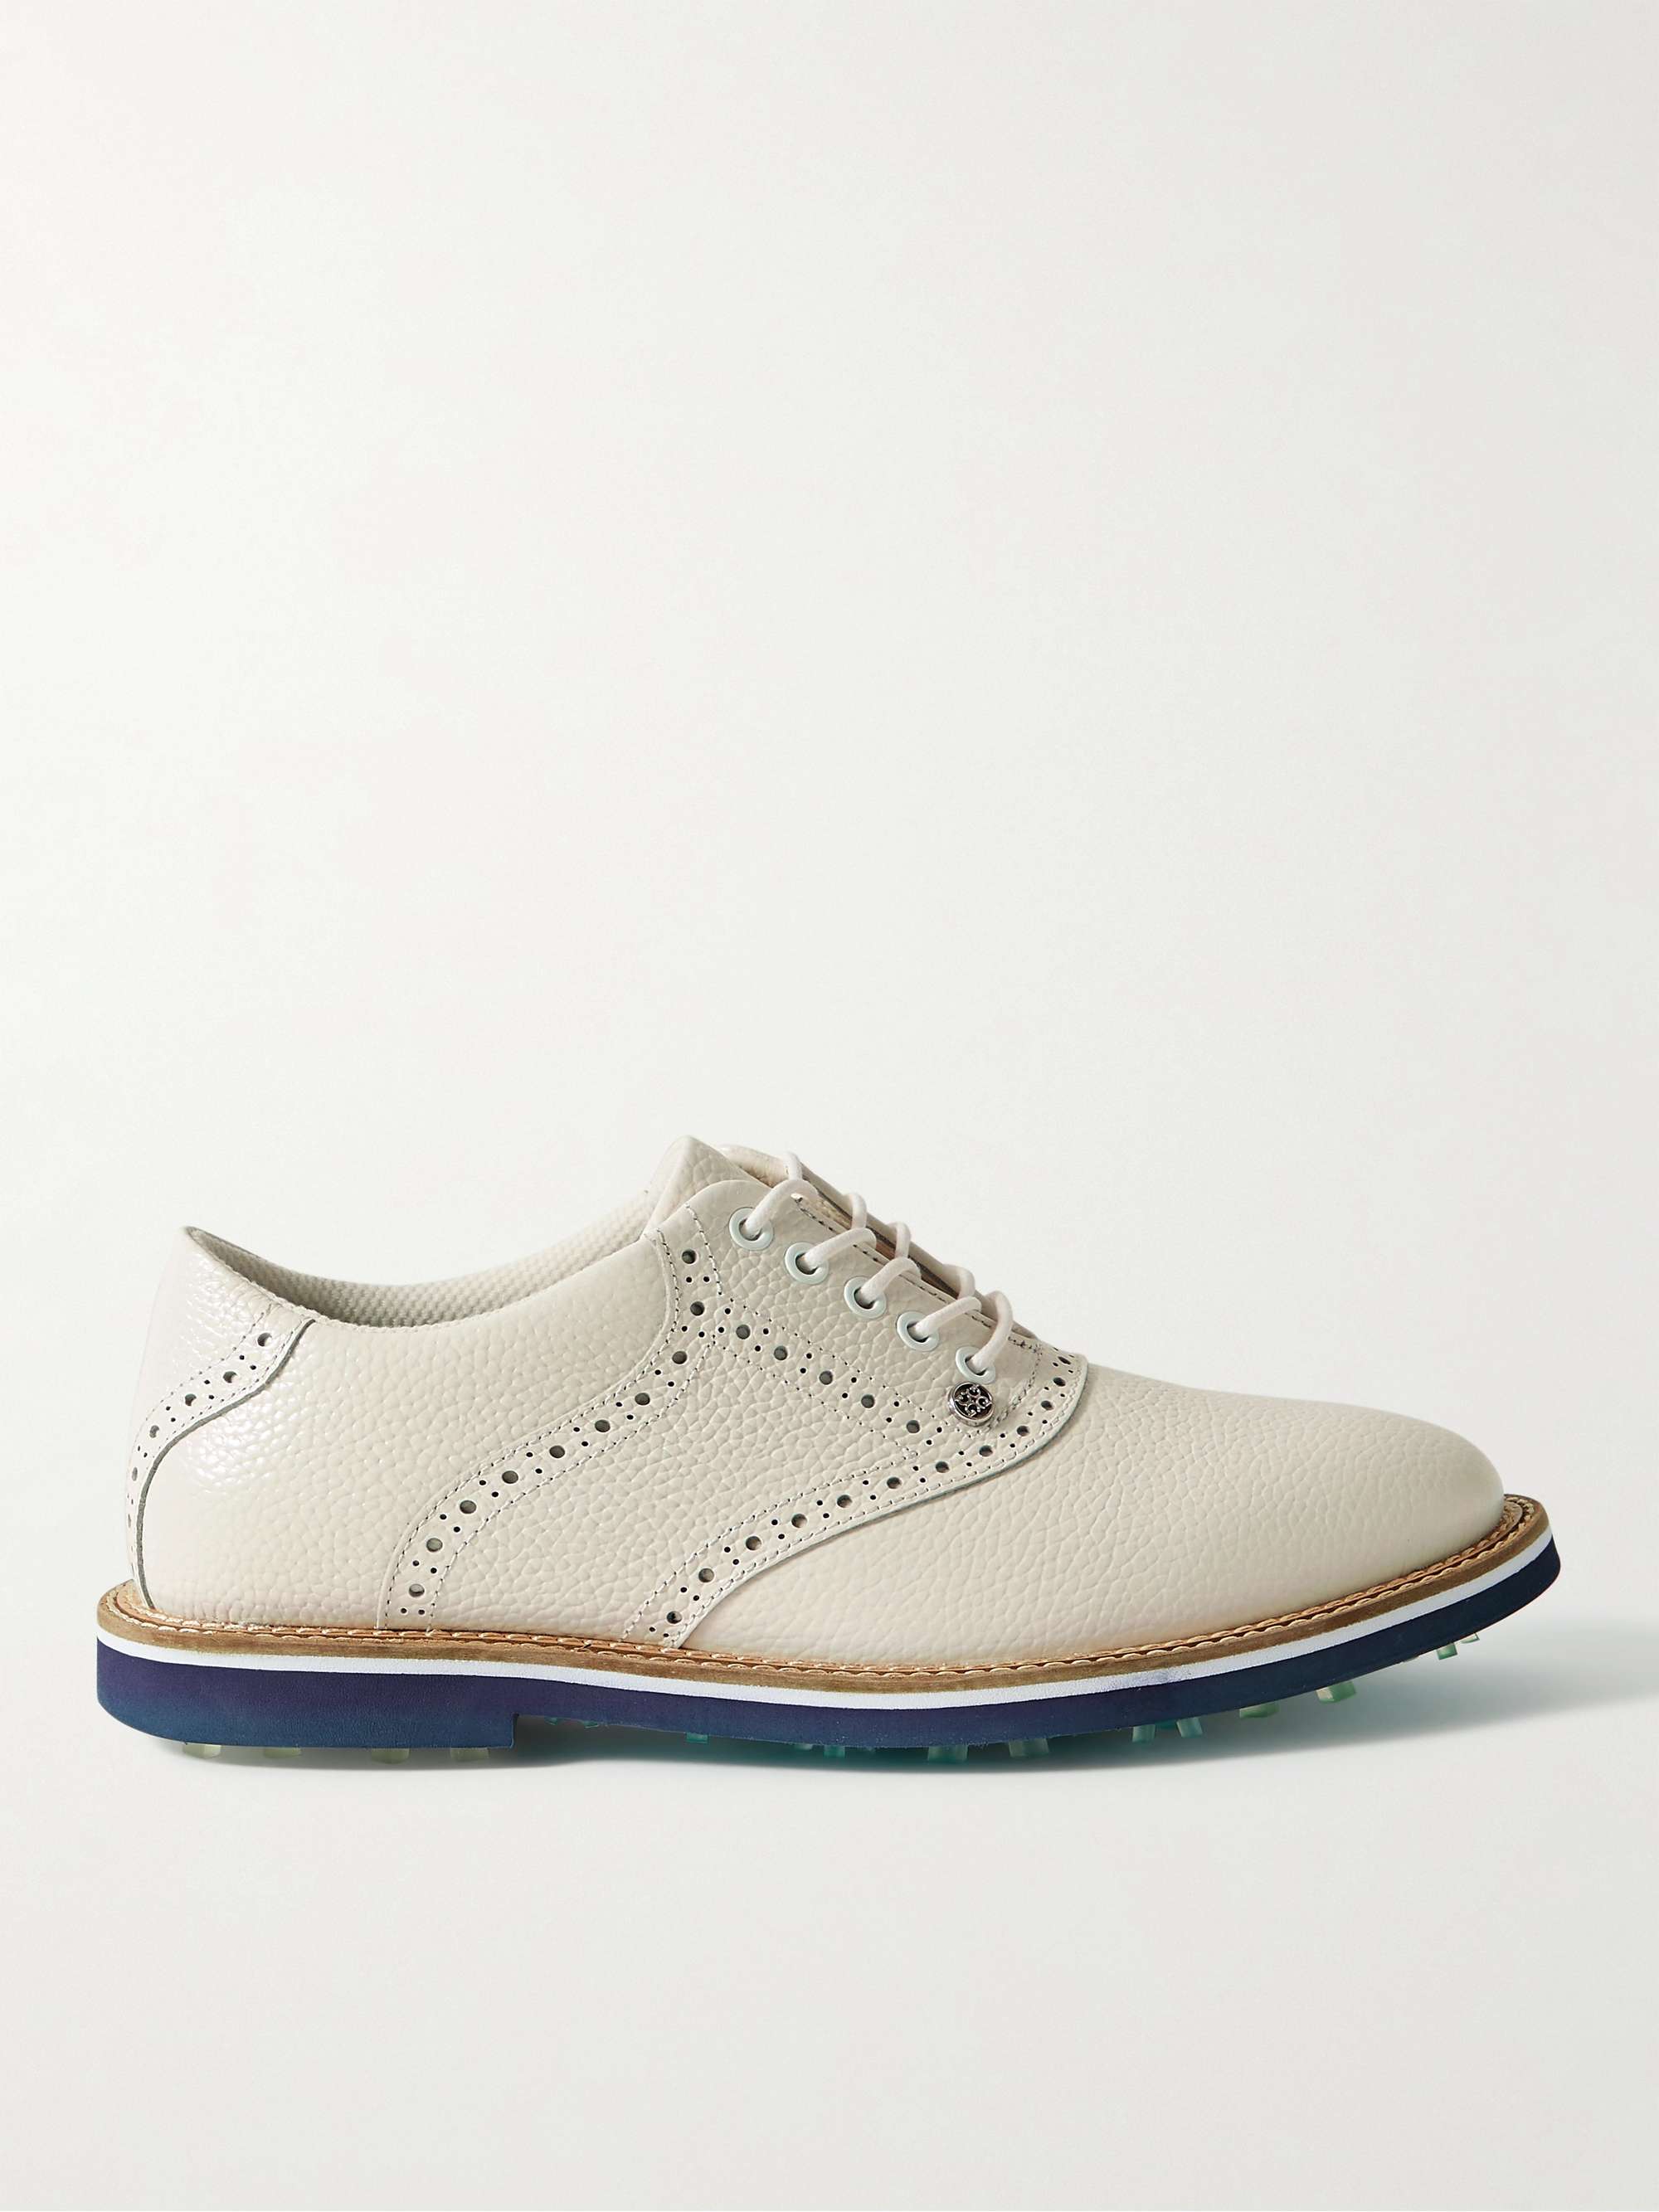 G/FORE Saddle Gallivanter Pebble-Grain Leather Golf Shoes